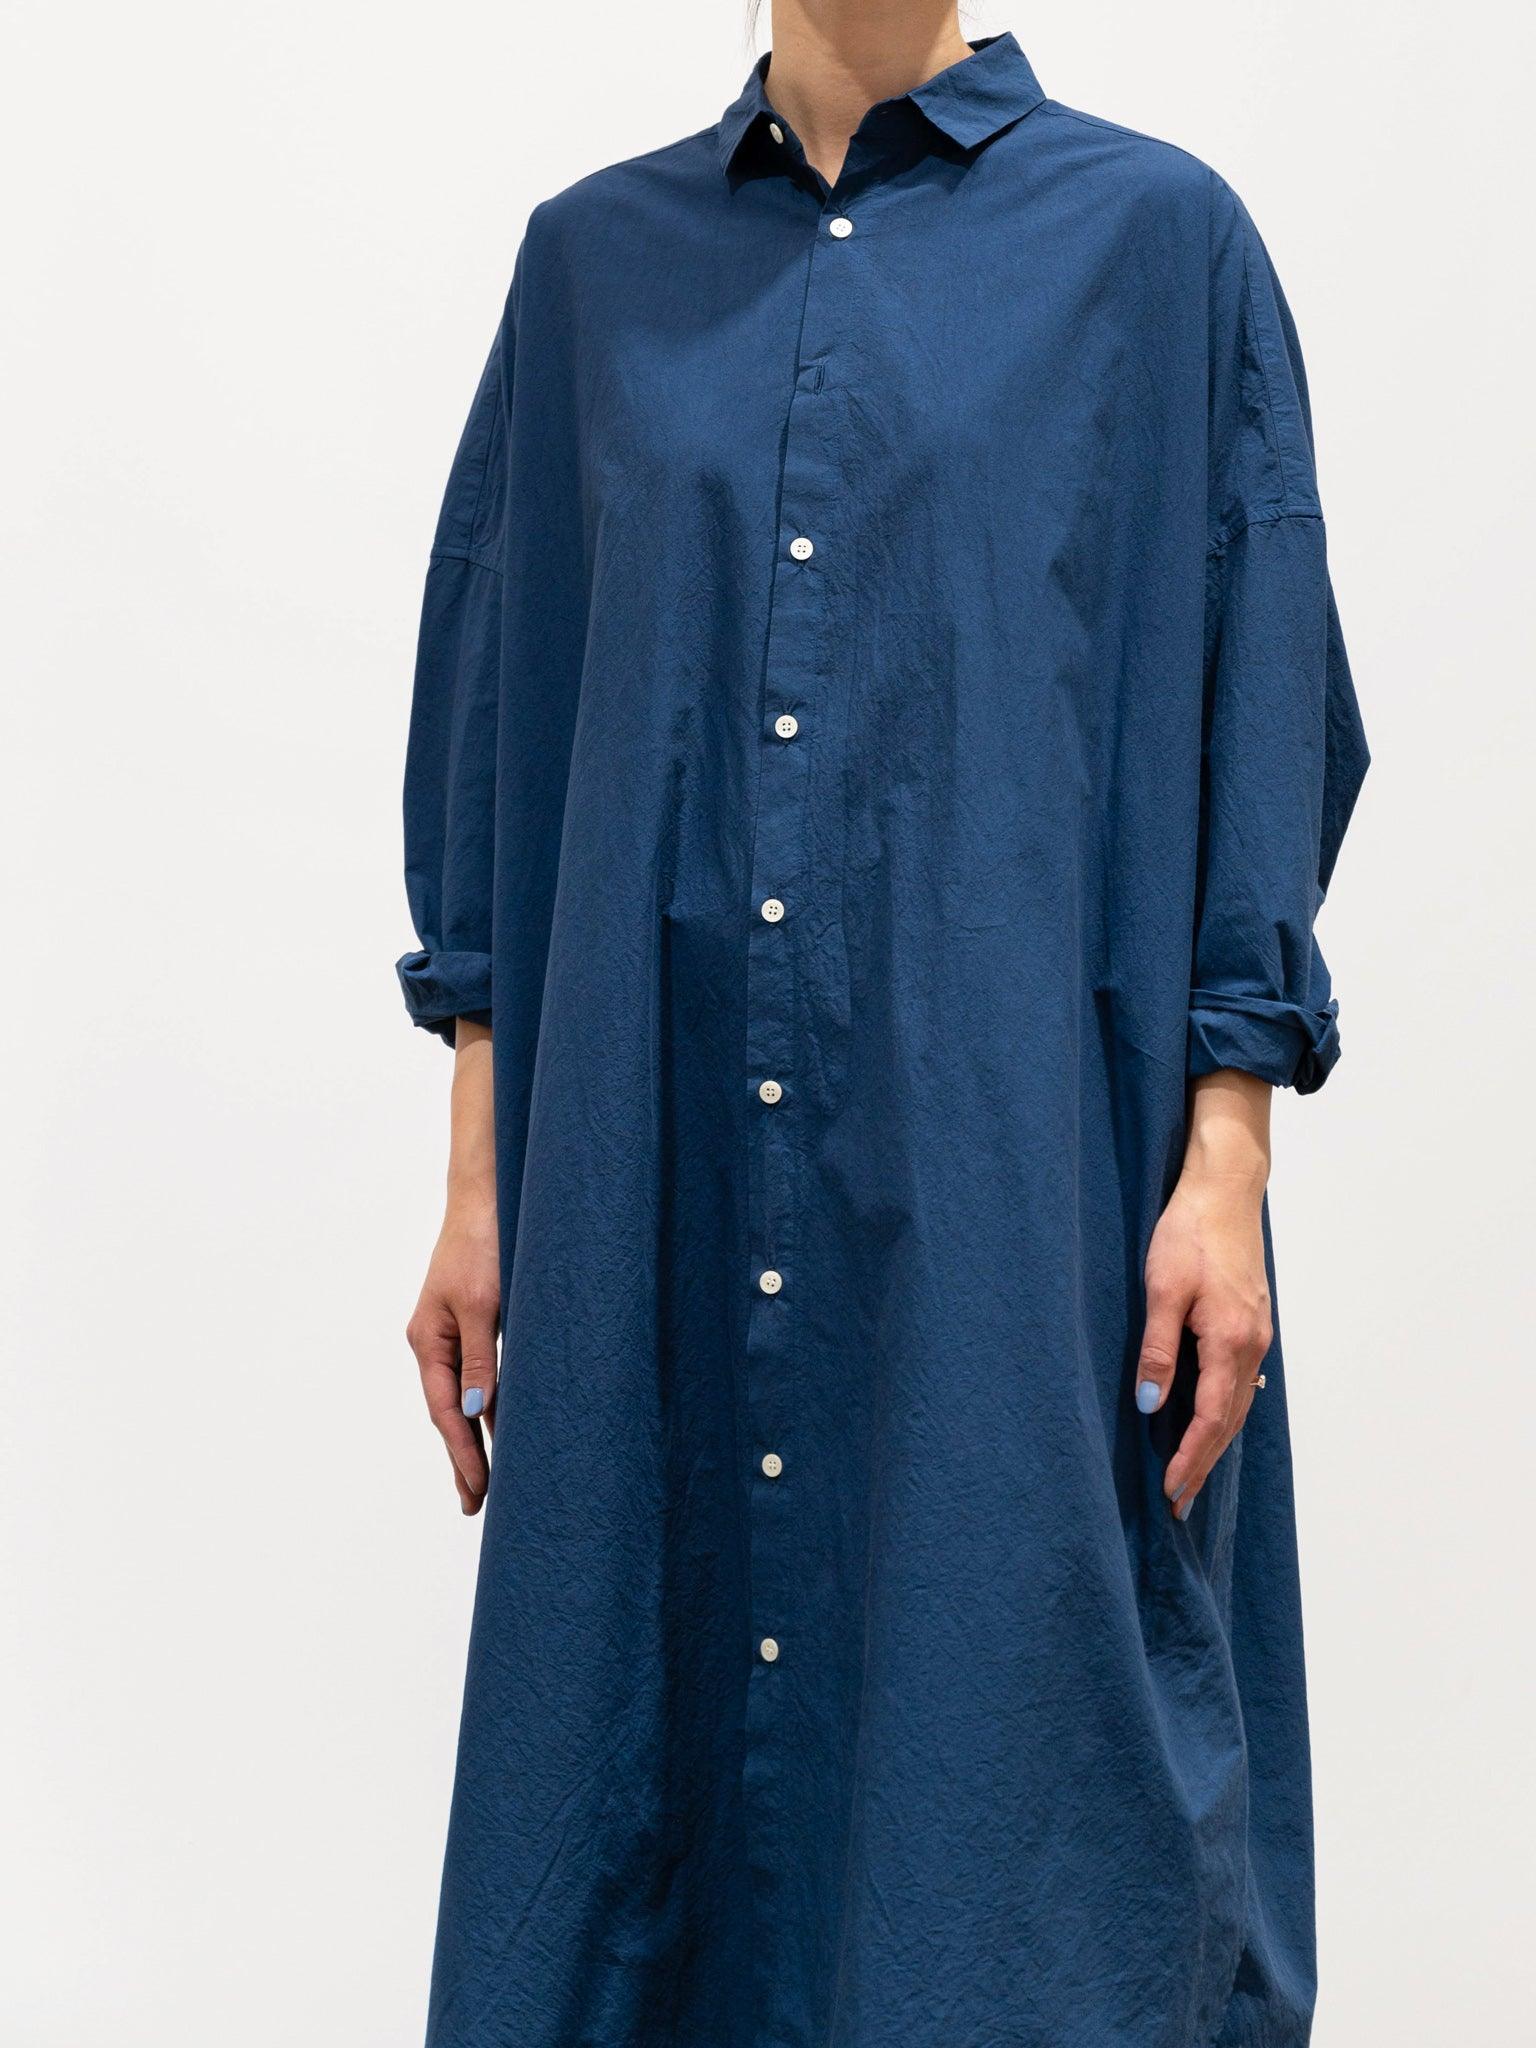 Namu Shop - Veritecoeur Long Shirt Dress - Navy